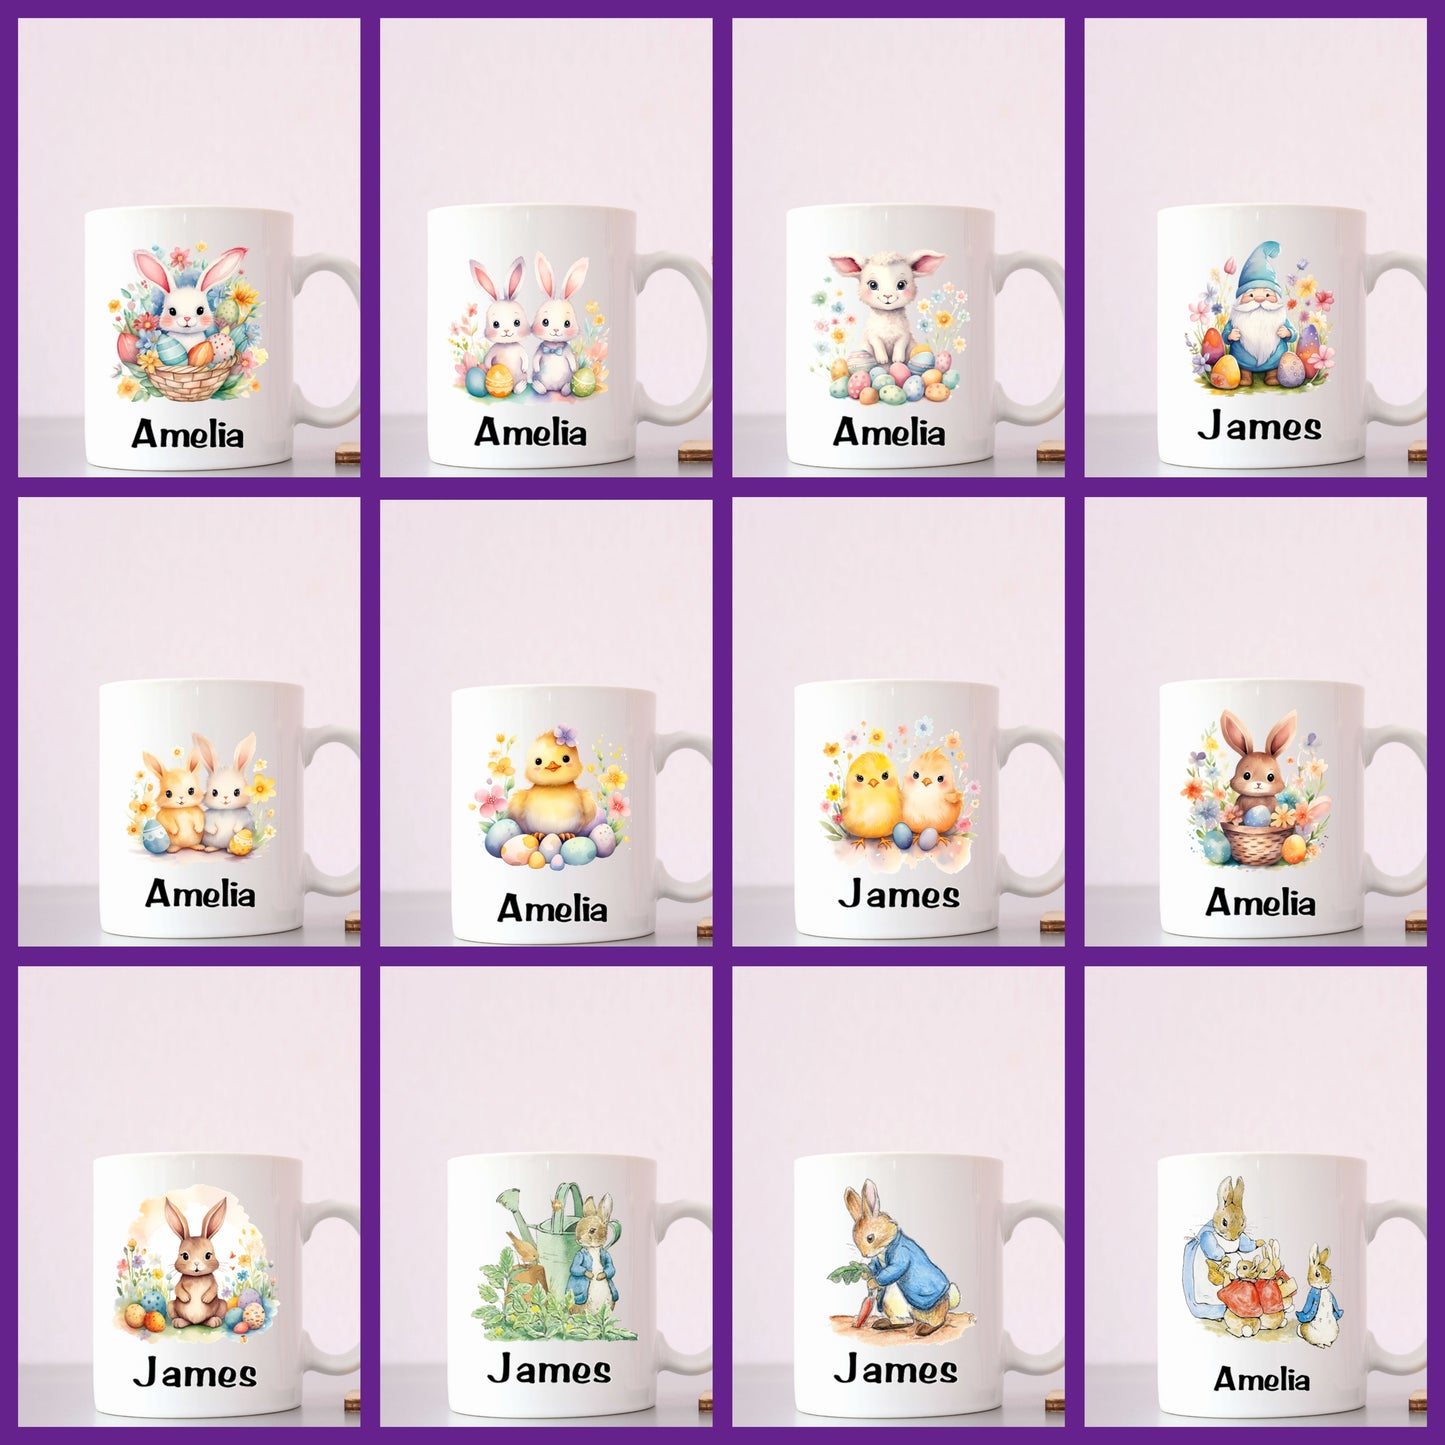 Personalised Easter Mugs